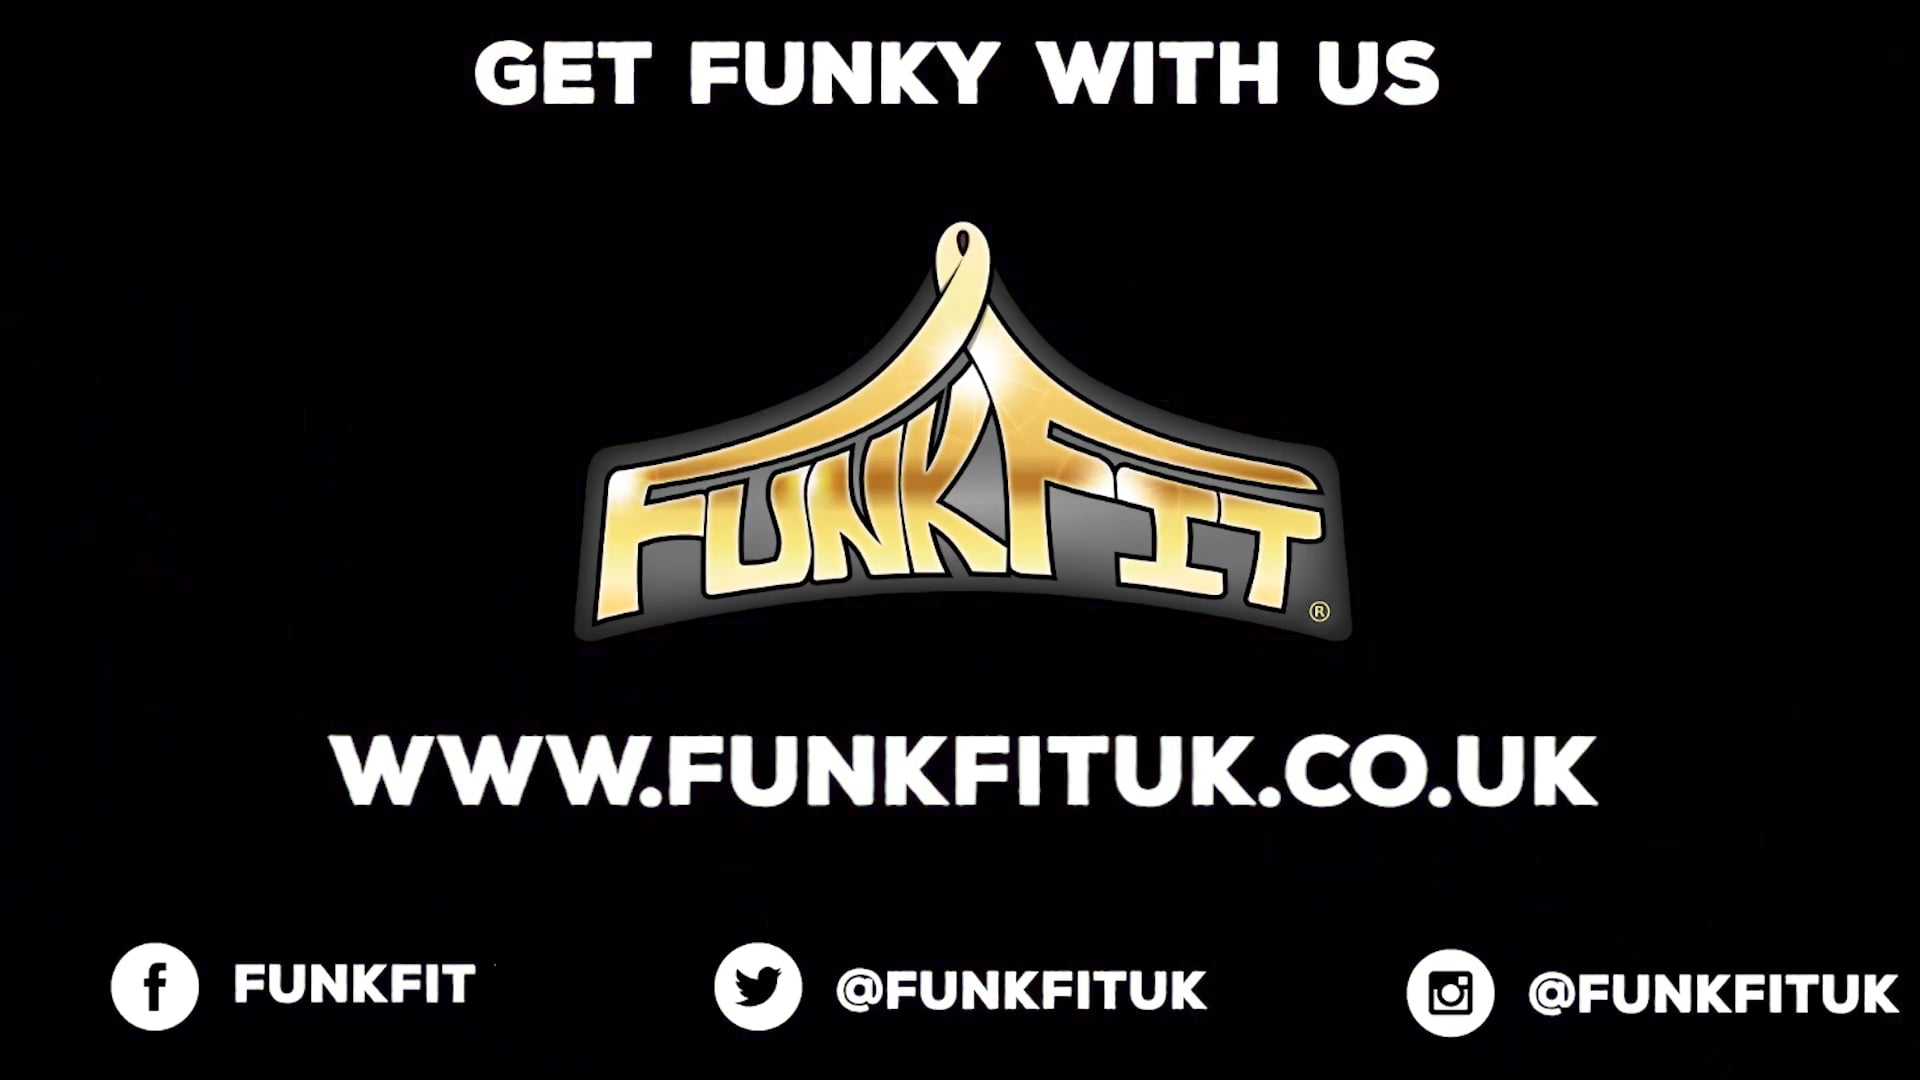 FunkFit is looking for Funkmasters!